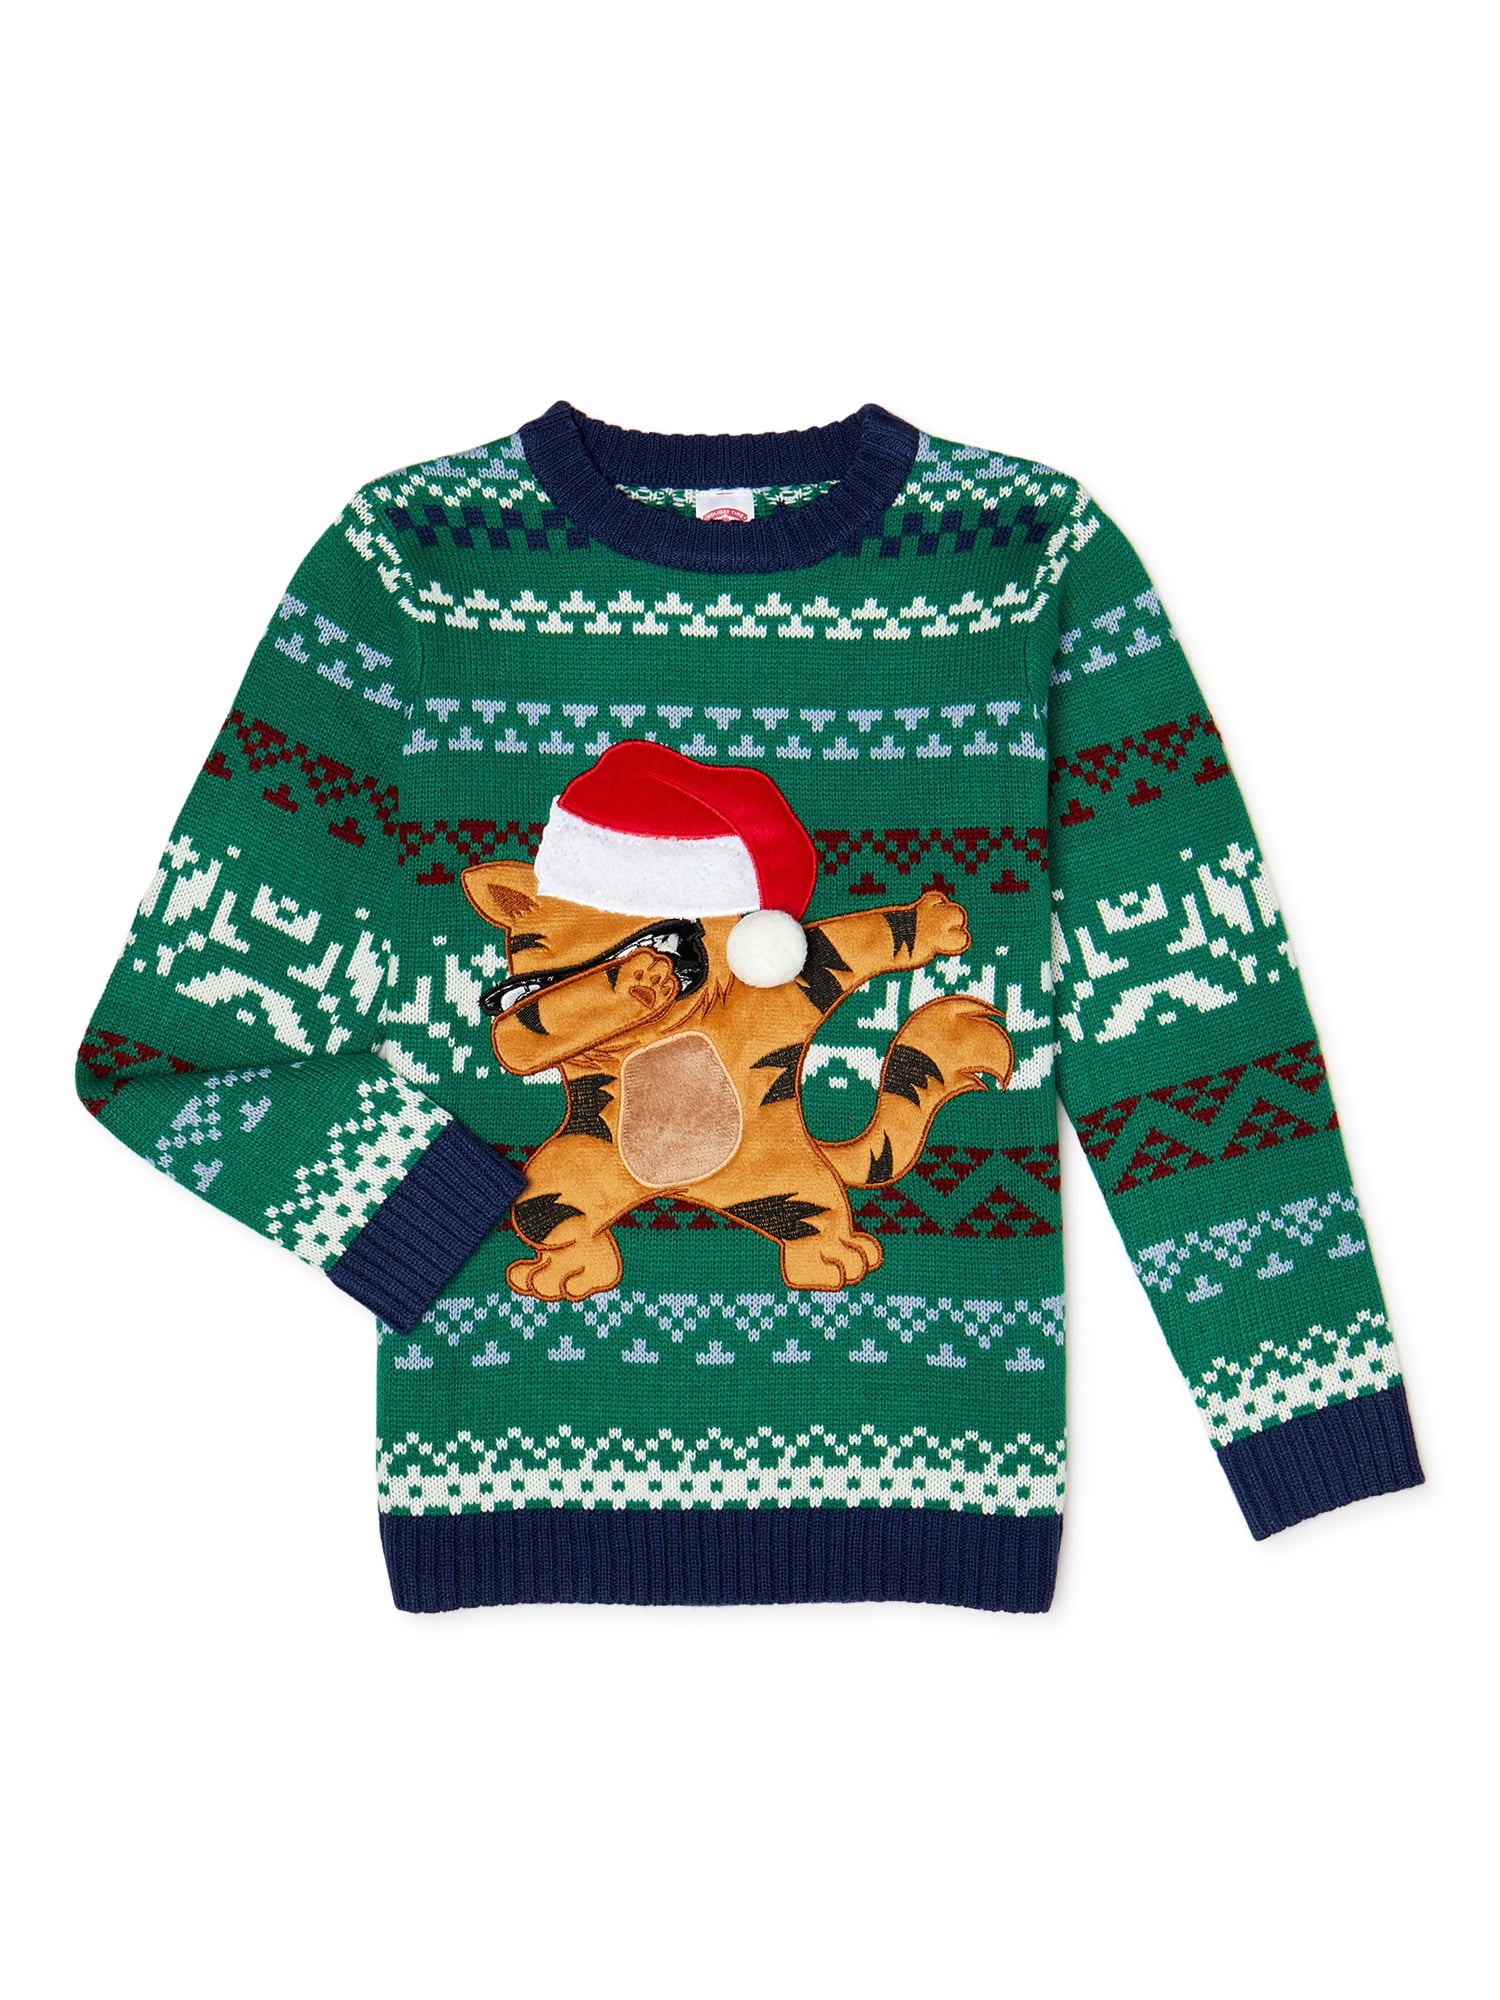 Kids' Christmas Sweaters